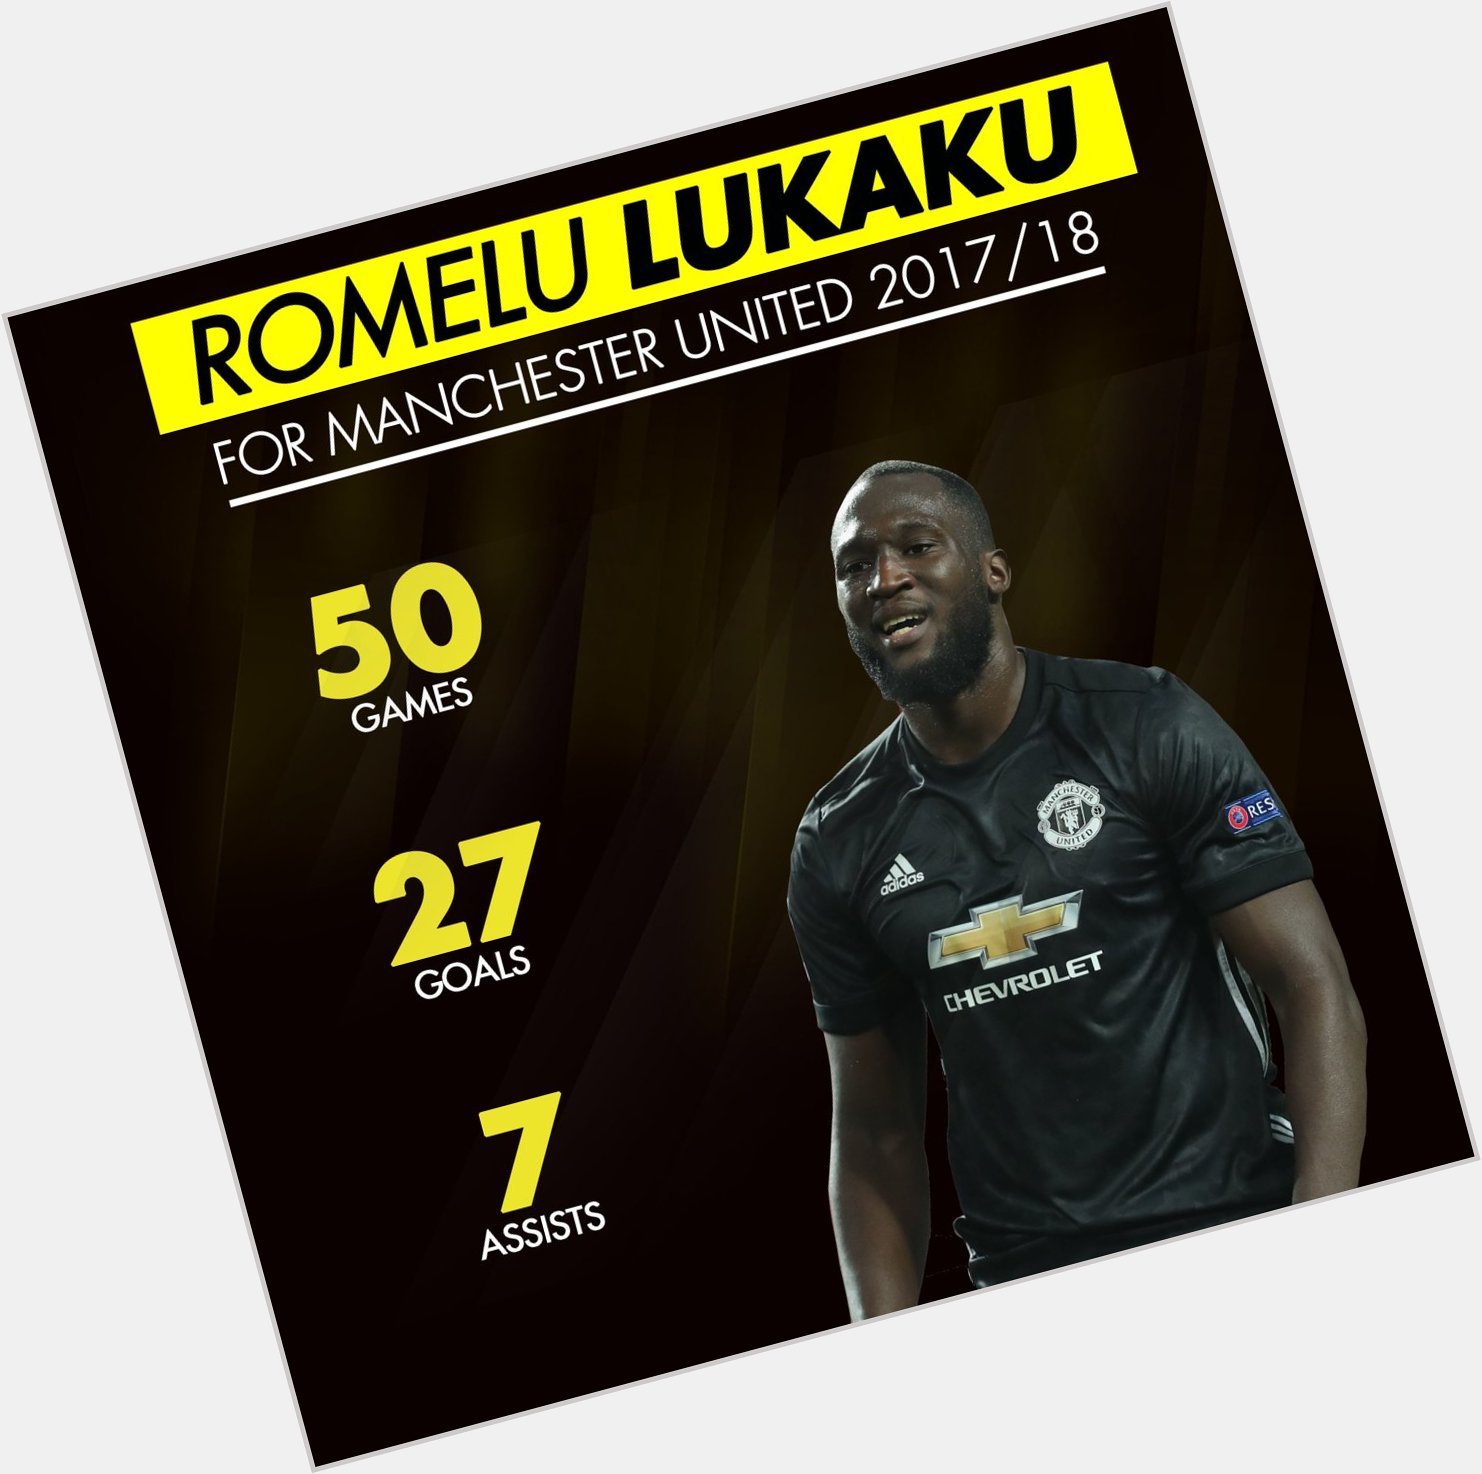 Happy 25th birthday to Romelu Lukaku.

His first season at Man United has been pretty impressive.. 